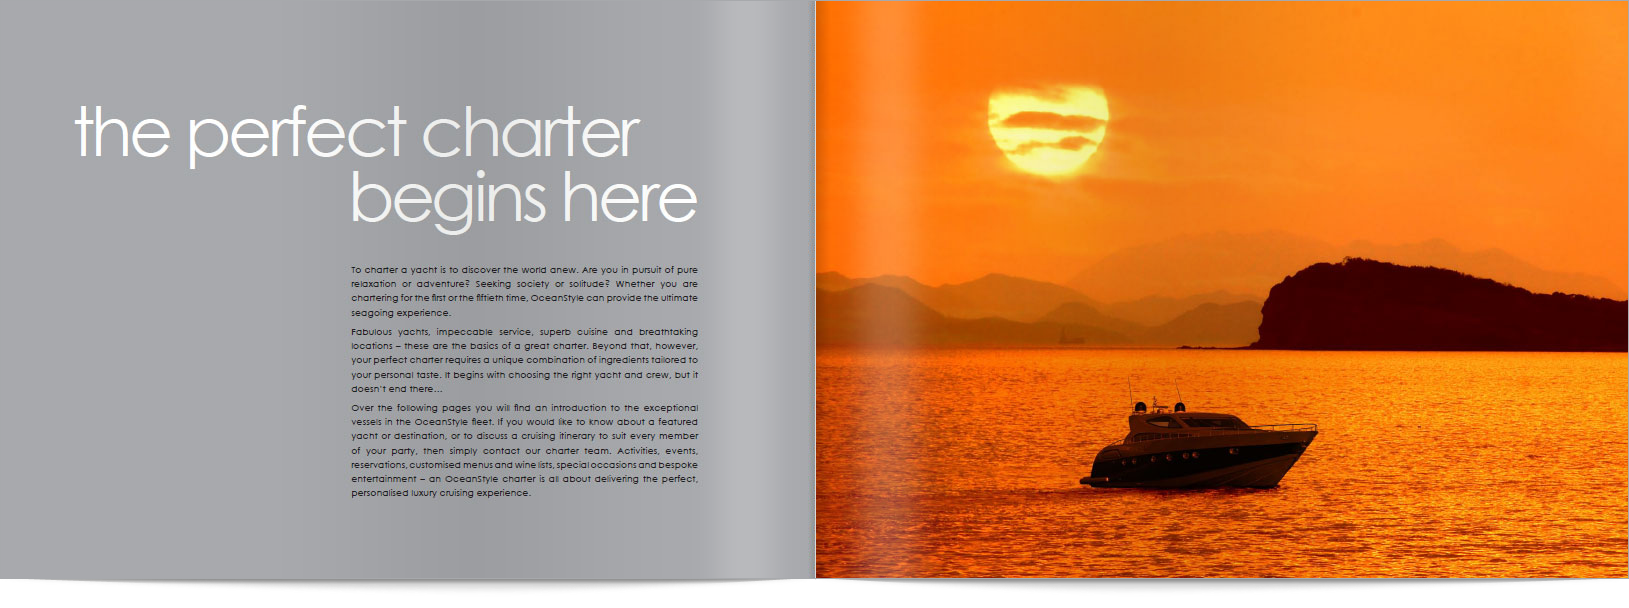 Oceanstyle Luxury yacht charter brochure